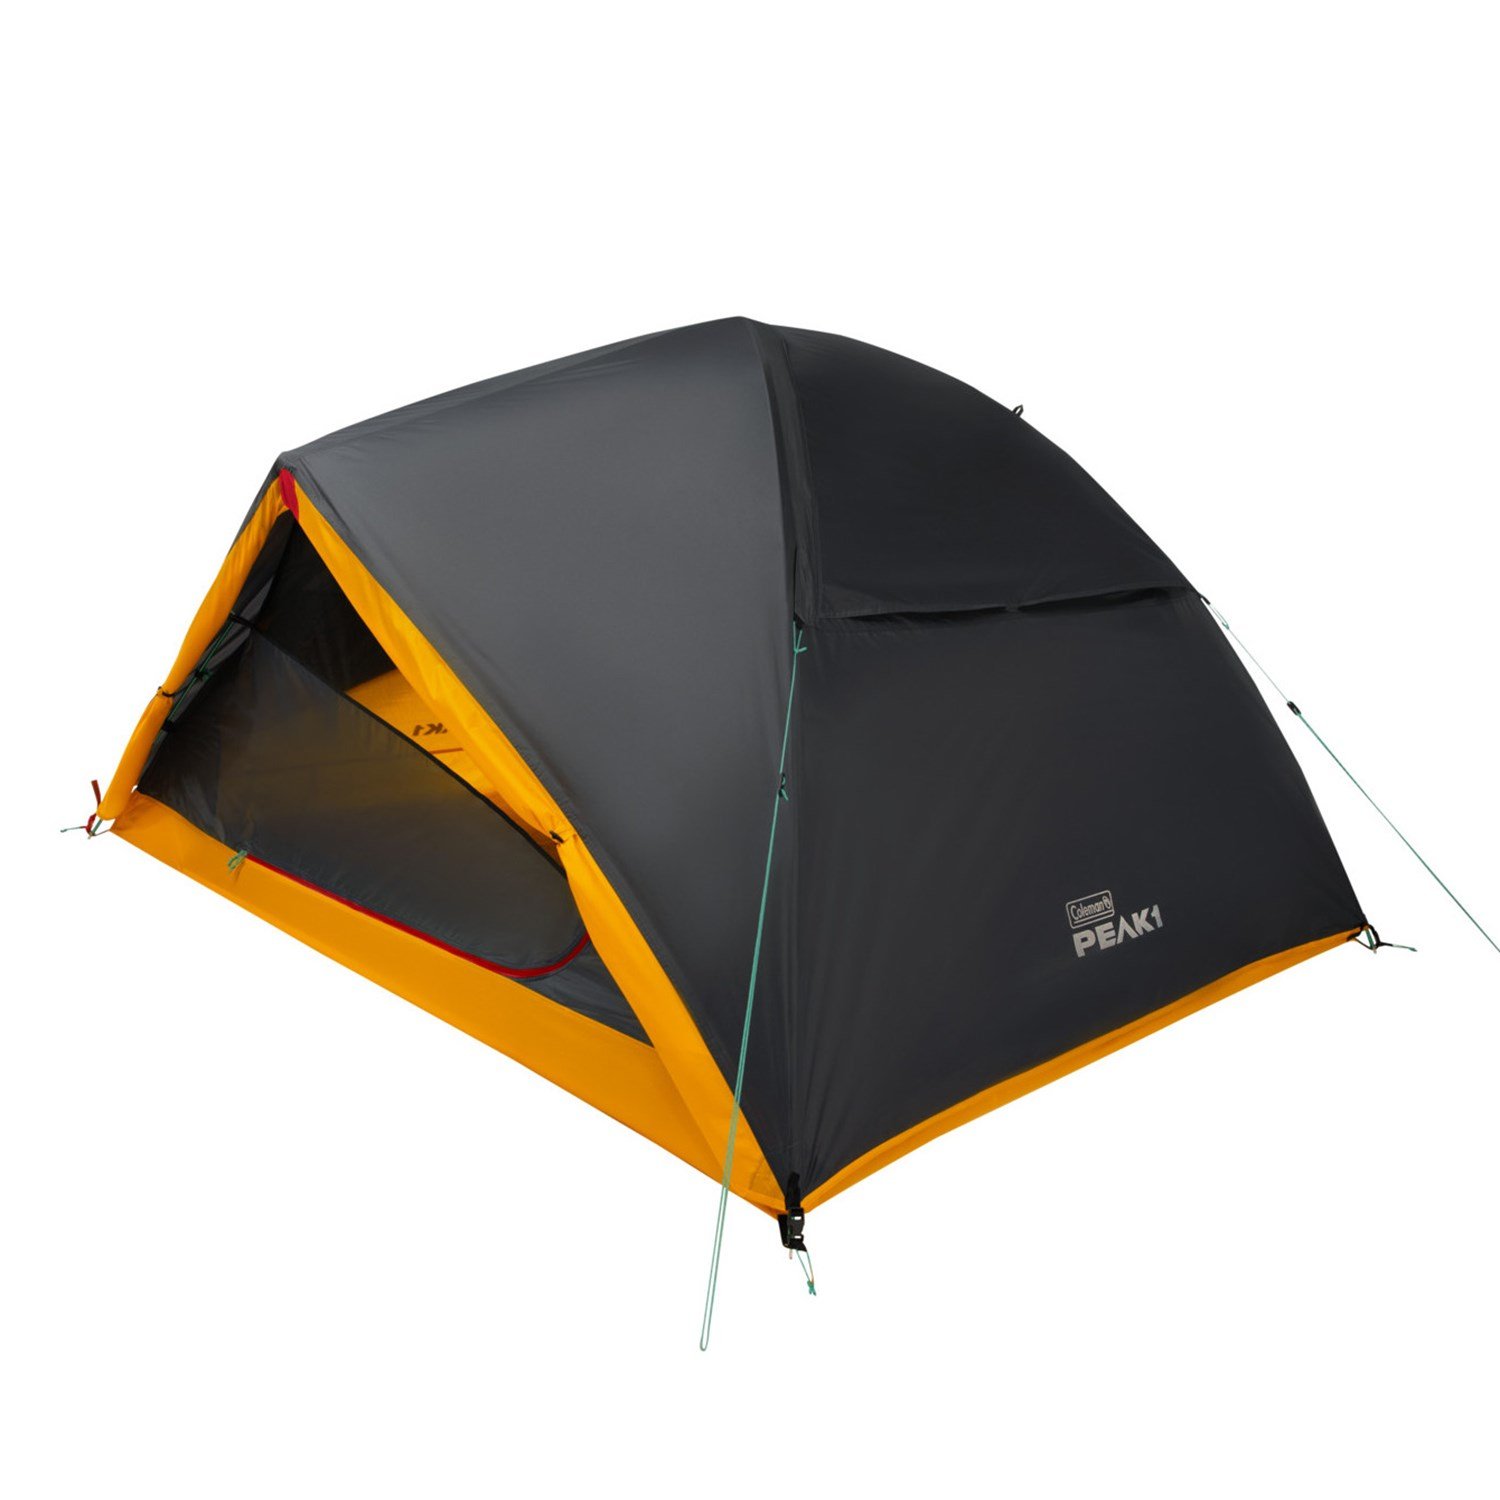 Weven beroemd engel Coleman Peak1™ 2-Person Backpacking Tent | evo